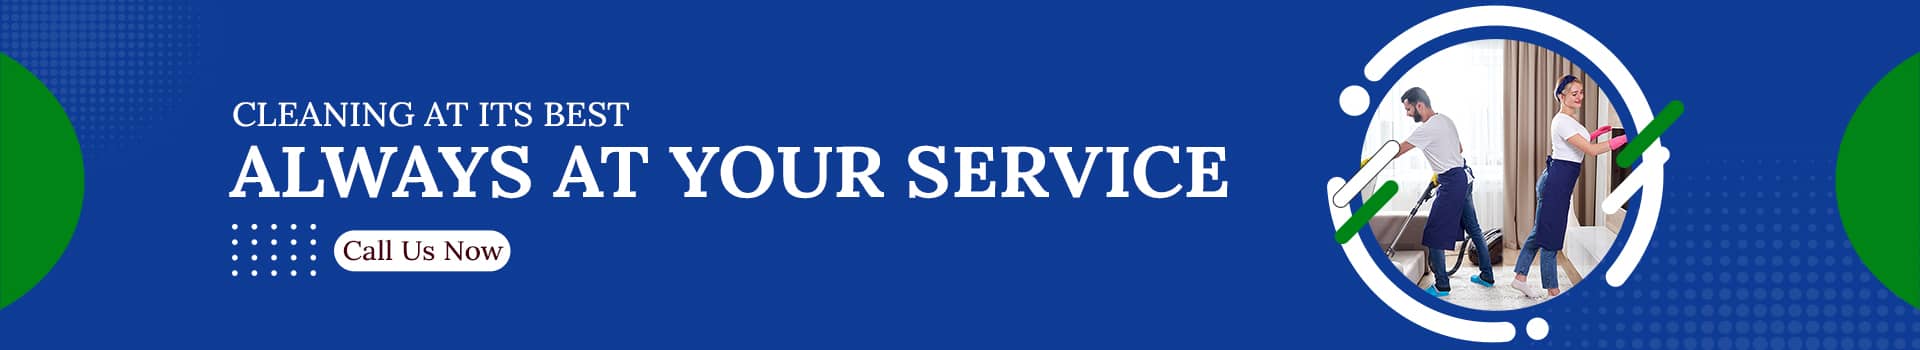 service banner